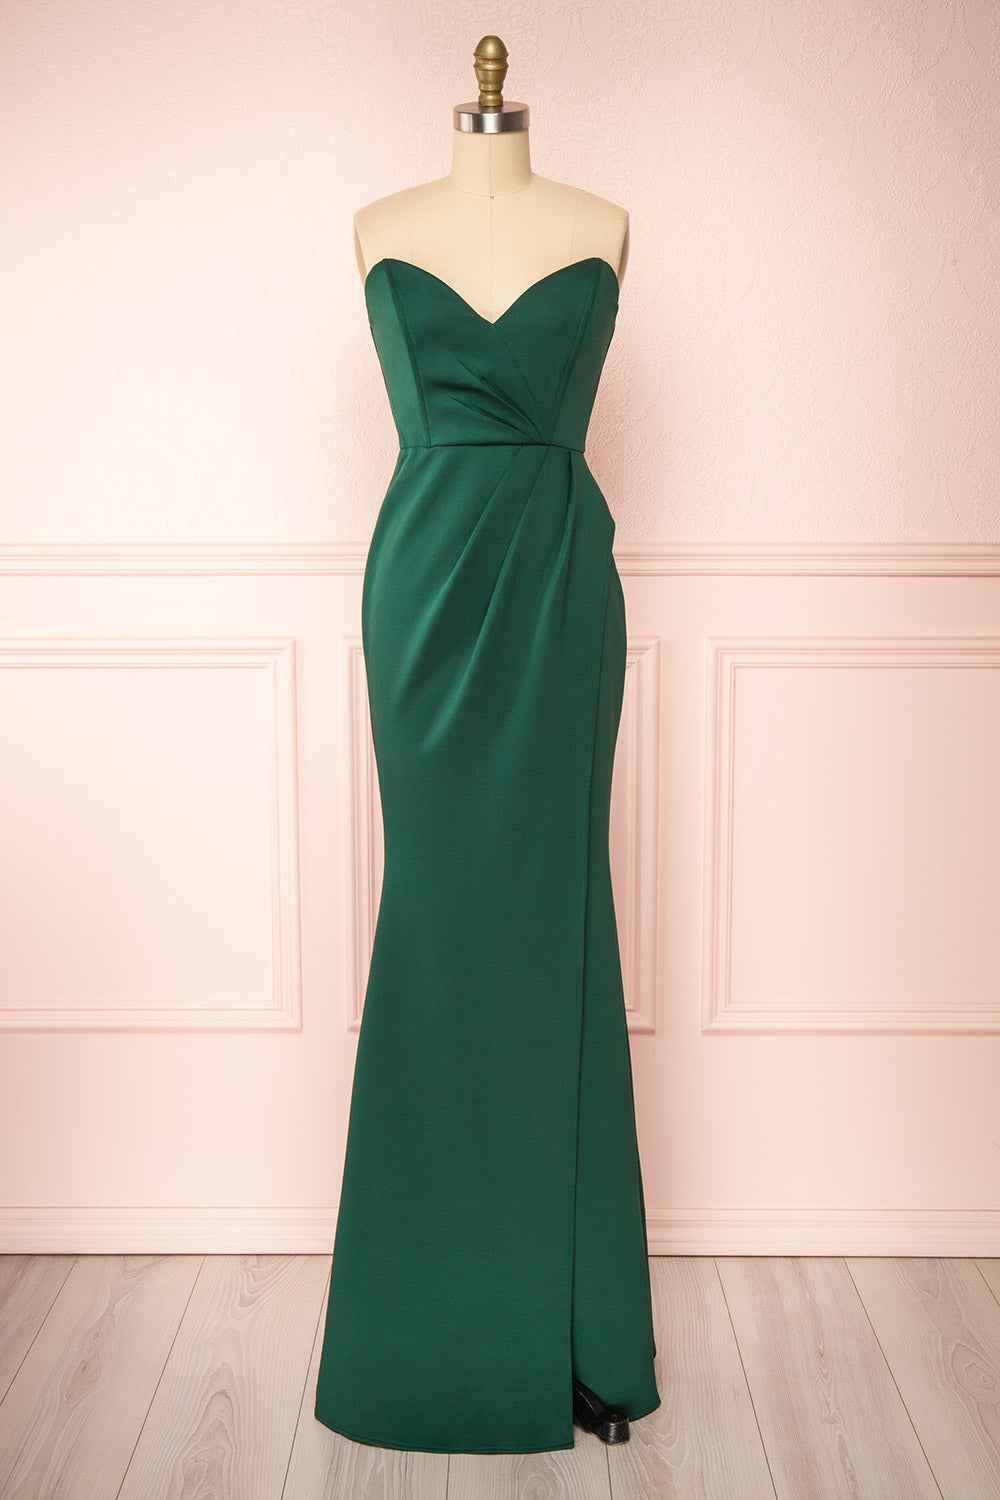 Nagini Green Draped Strapless Maxi Dress w/ Slit | Boutique 1861 front view